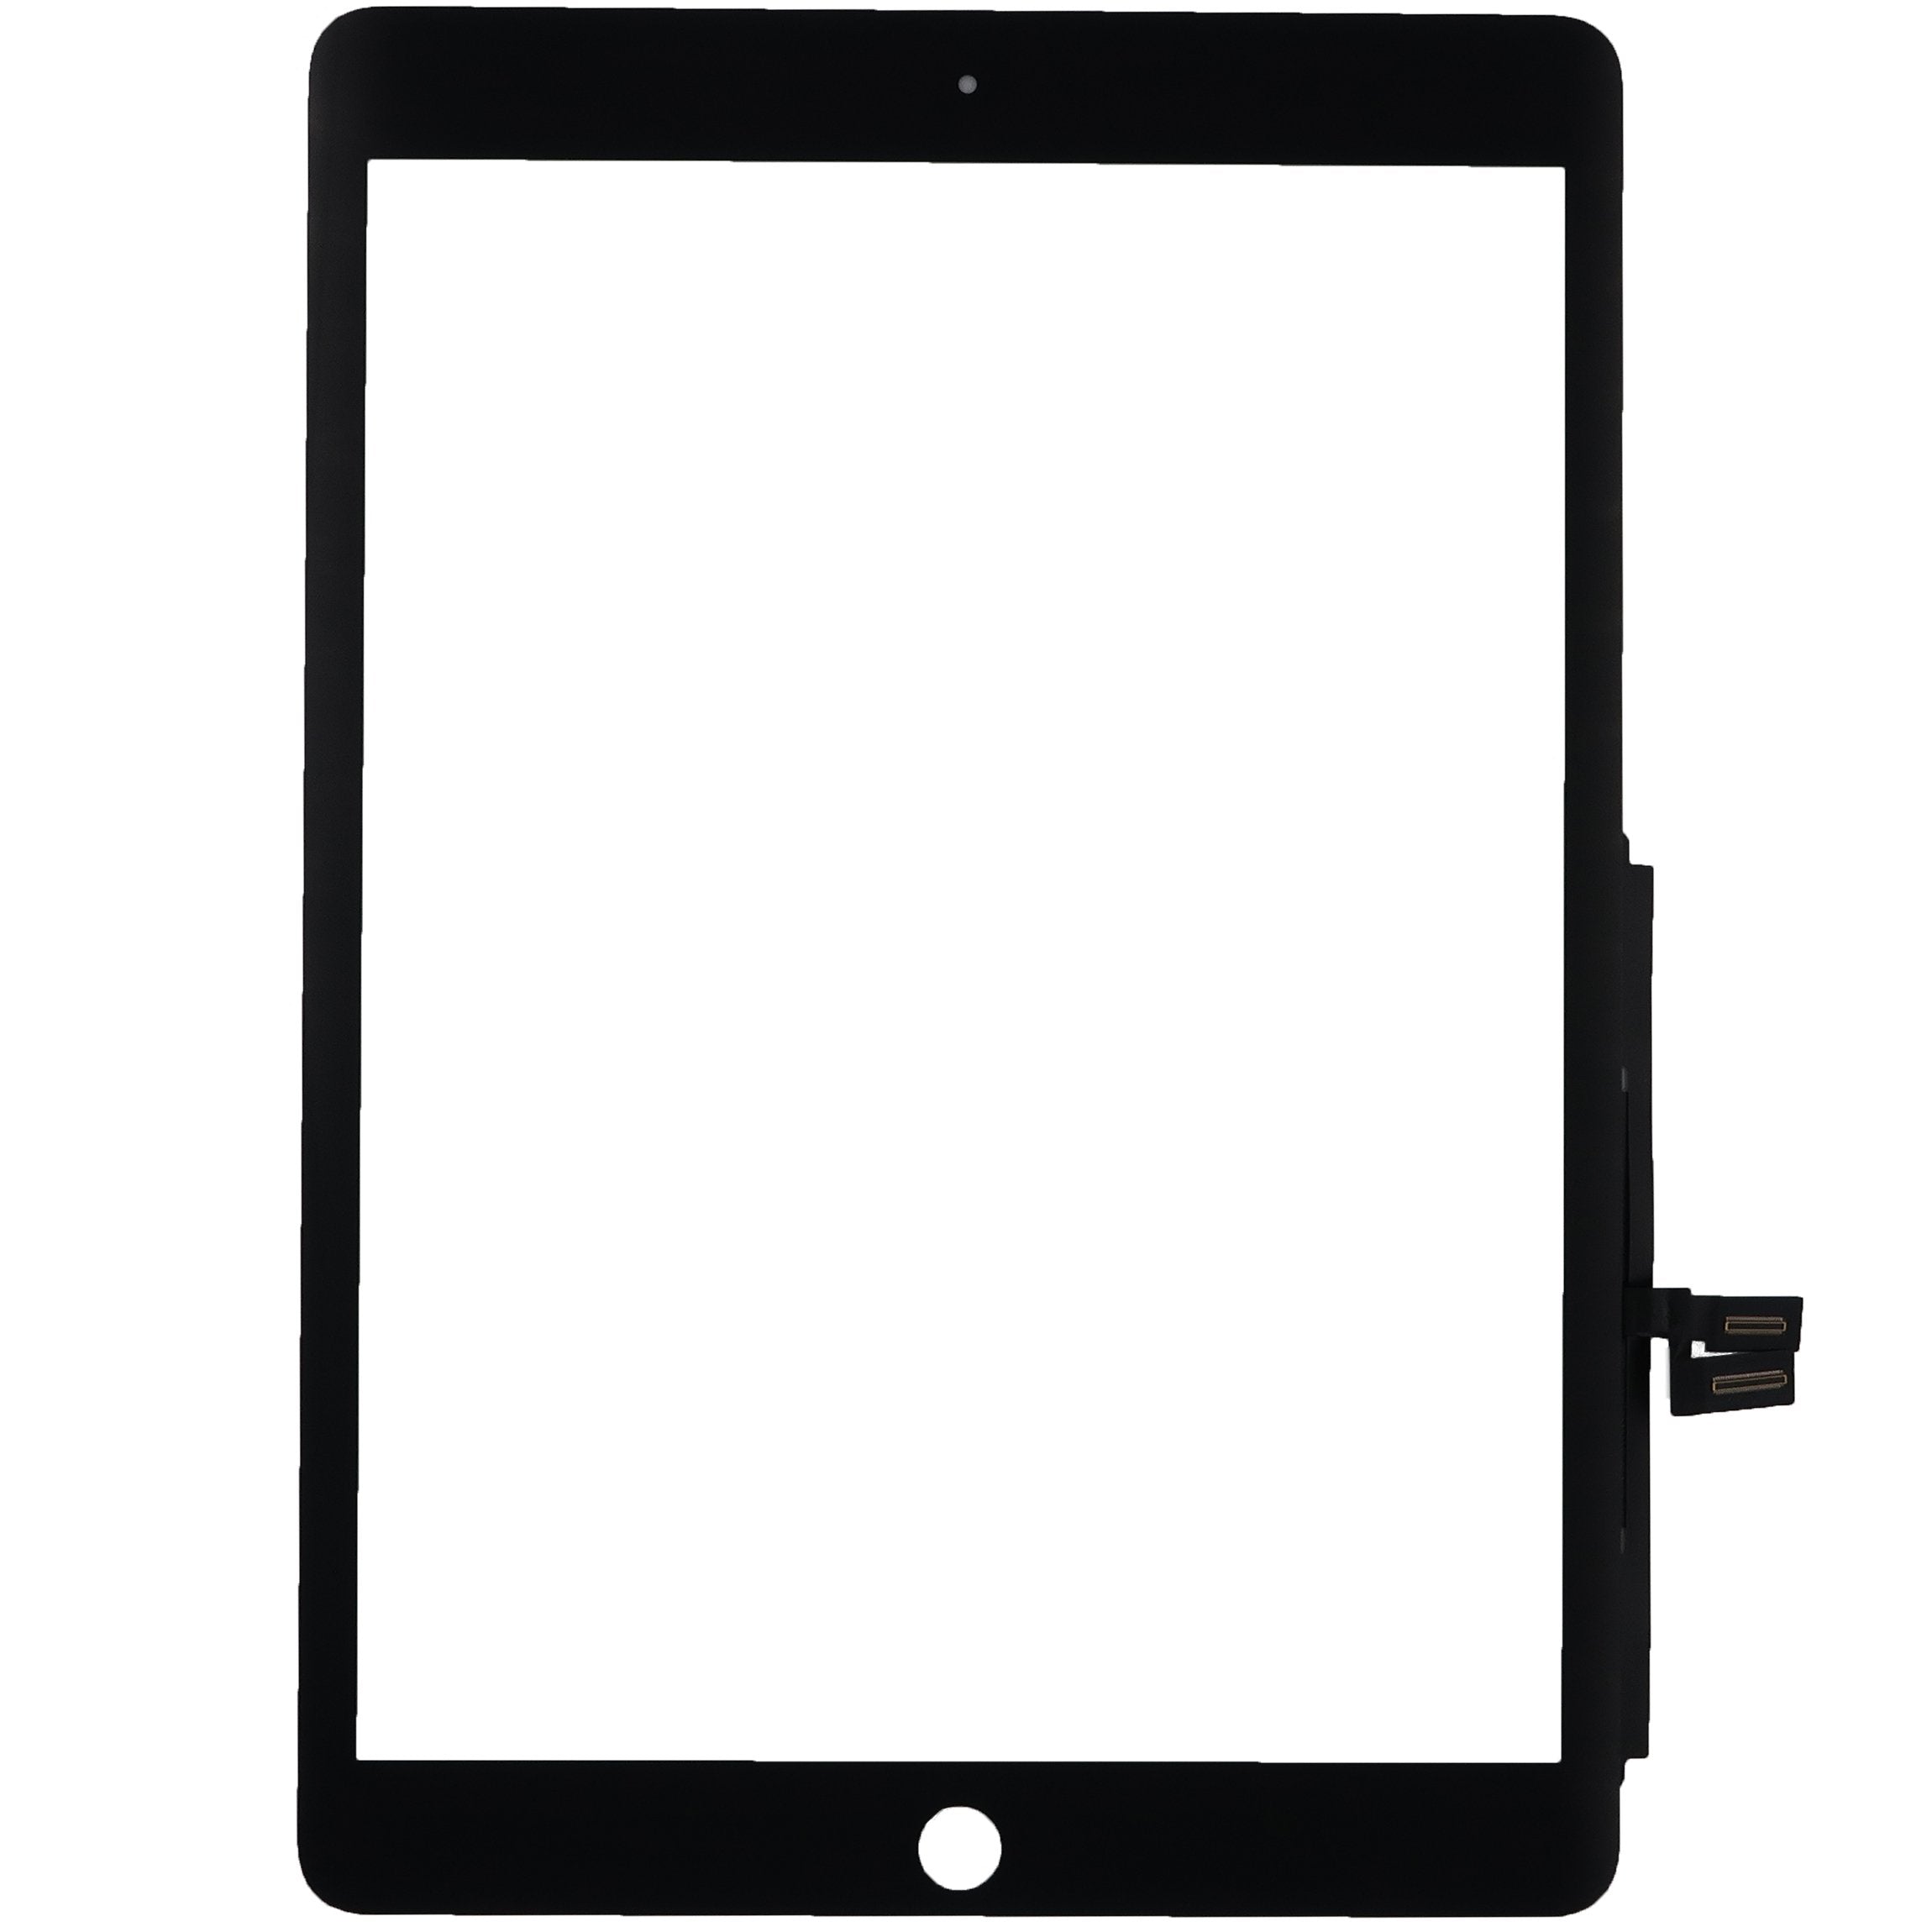 Touch Screen Digitizer for iPad 7 / iPad 8 / iPad 9 (White)